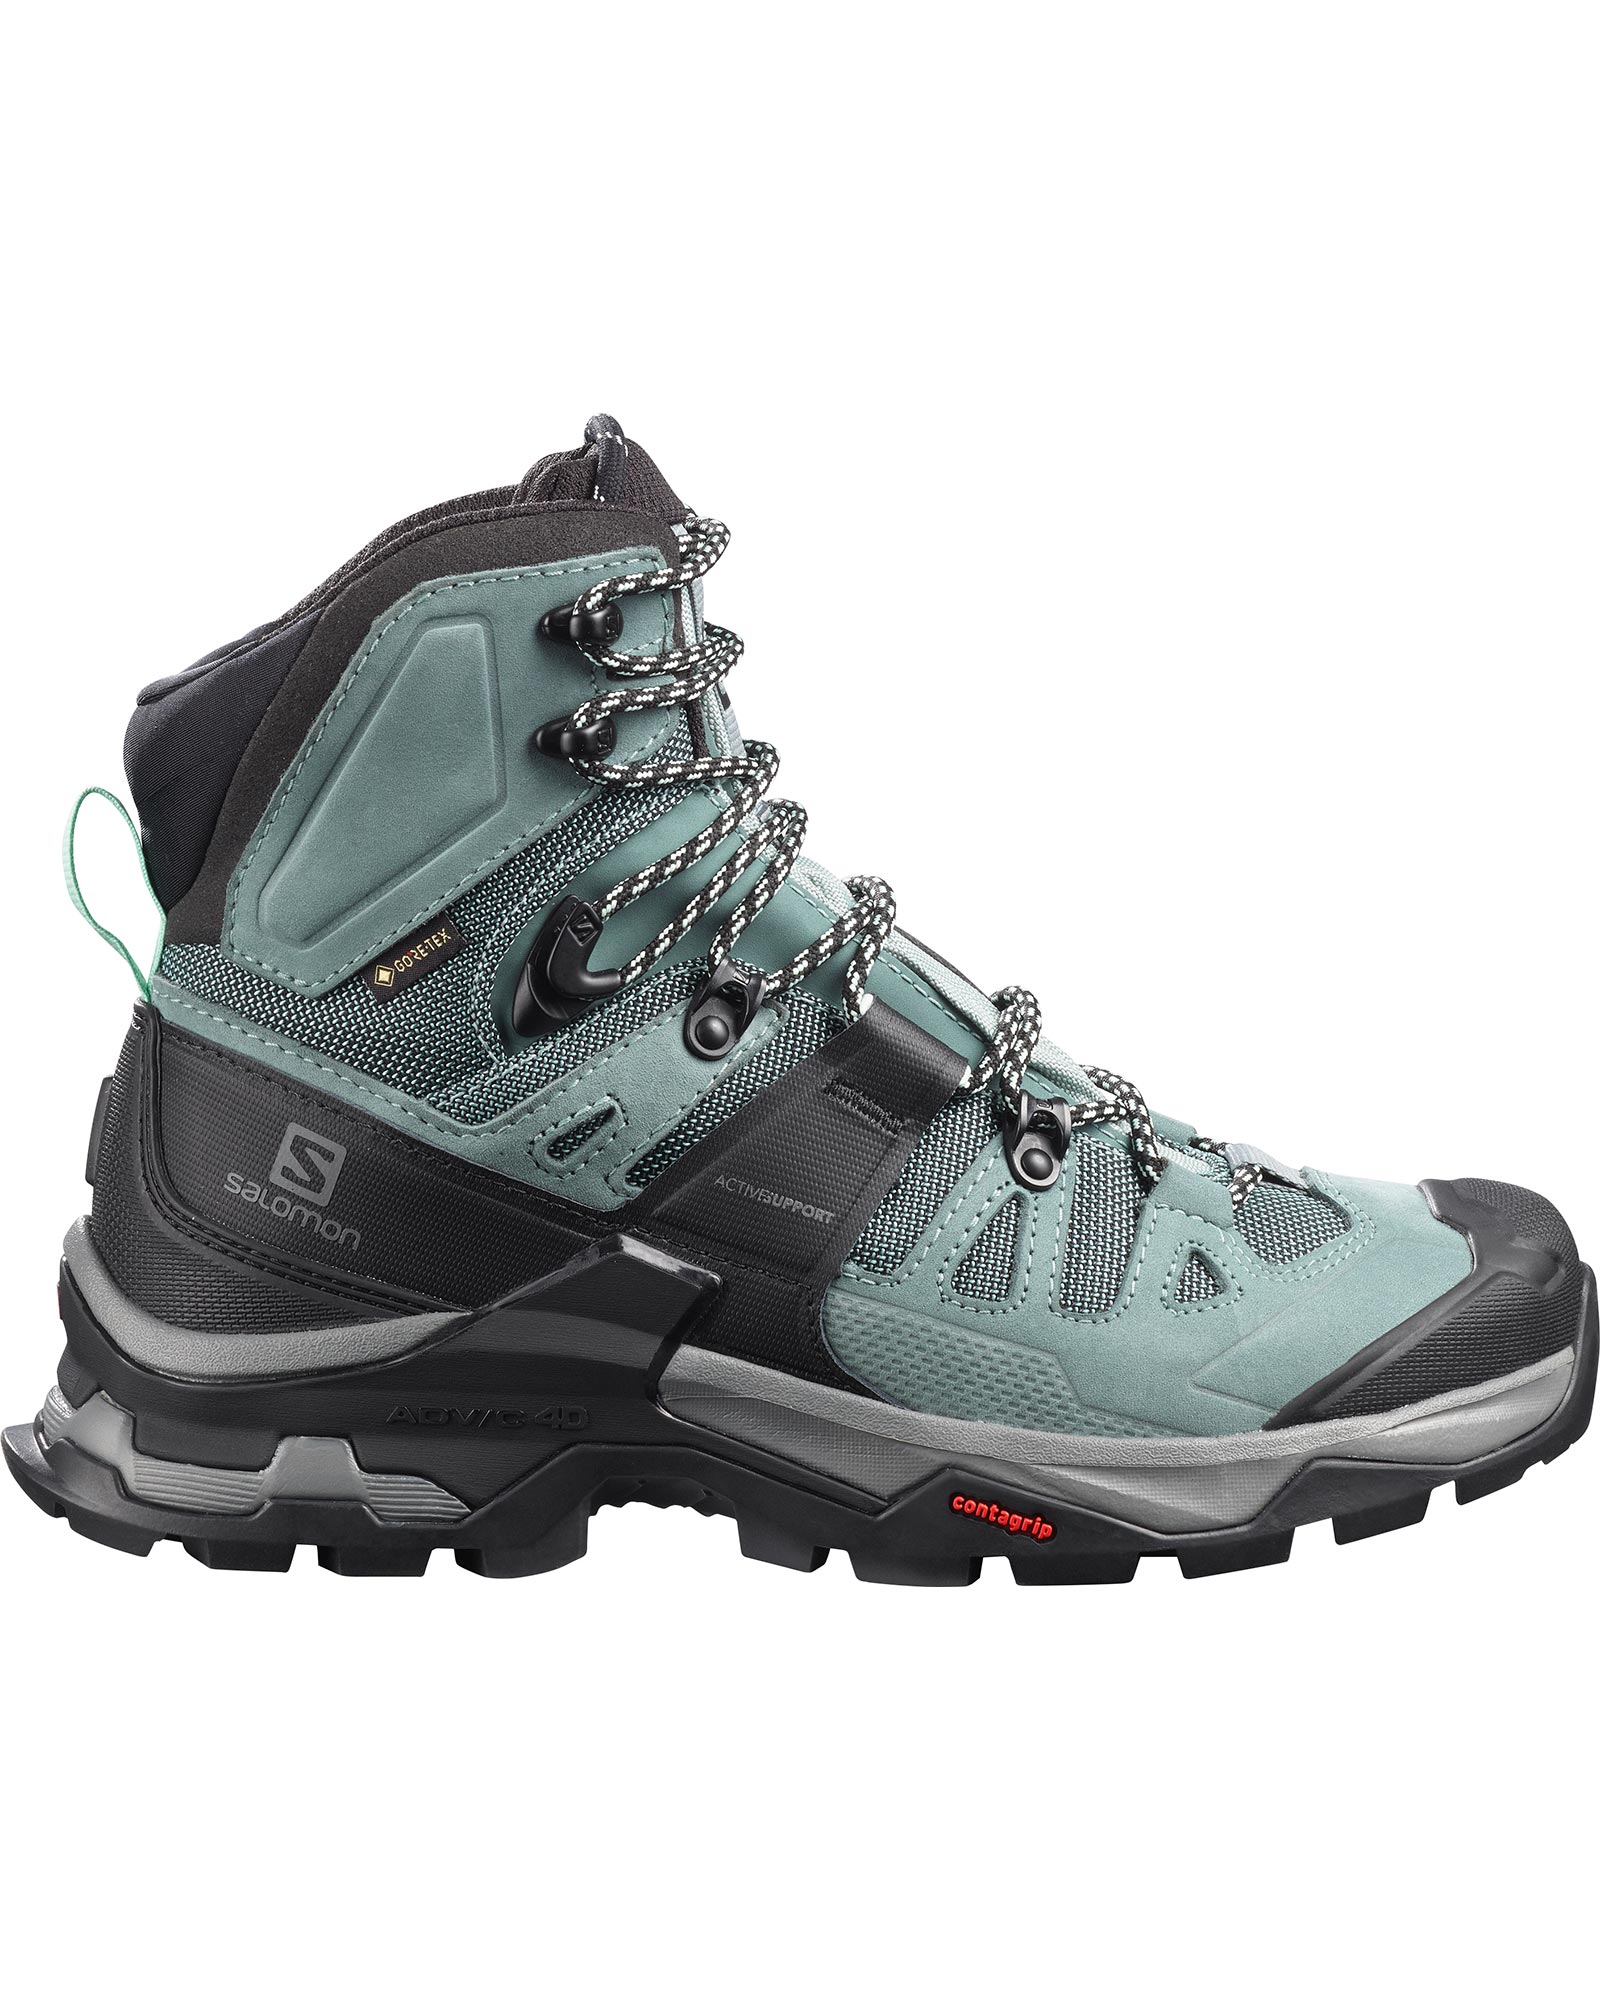 Salomon Quest 4D 4 GORE TEX Women’s Boots - Slate/Trooper/Opal Blue UK 5